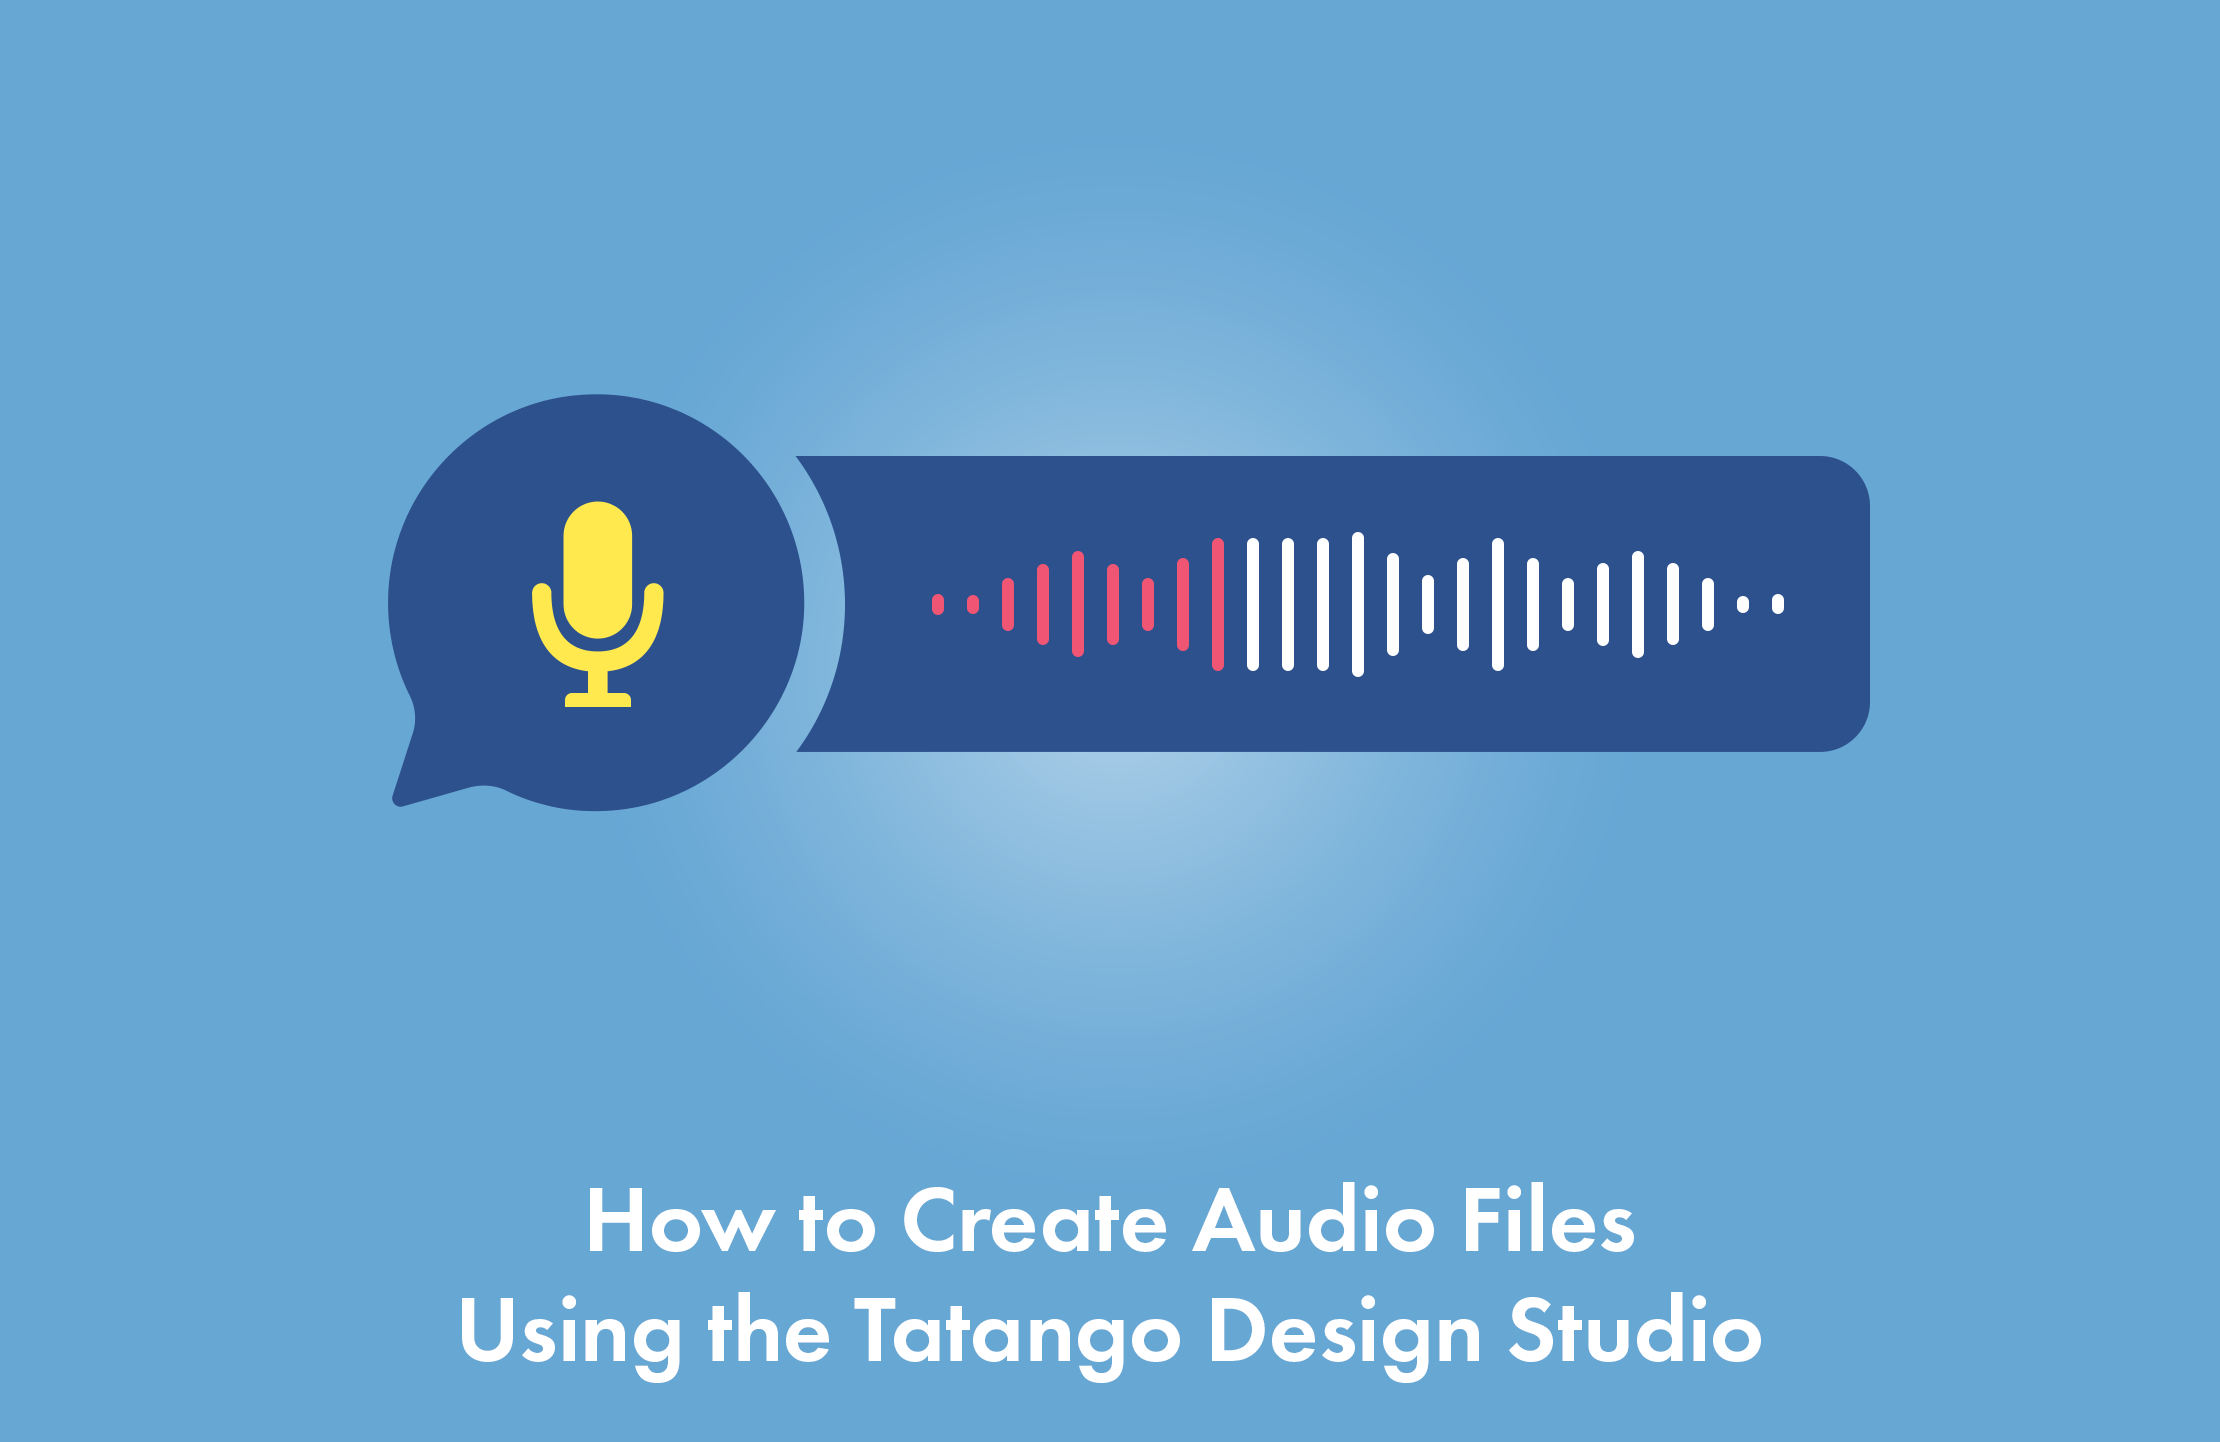 How to create audio files using Tatango Design Studio